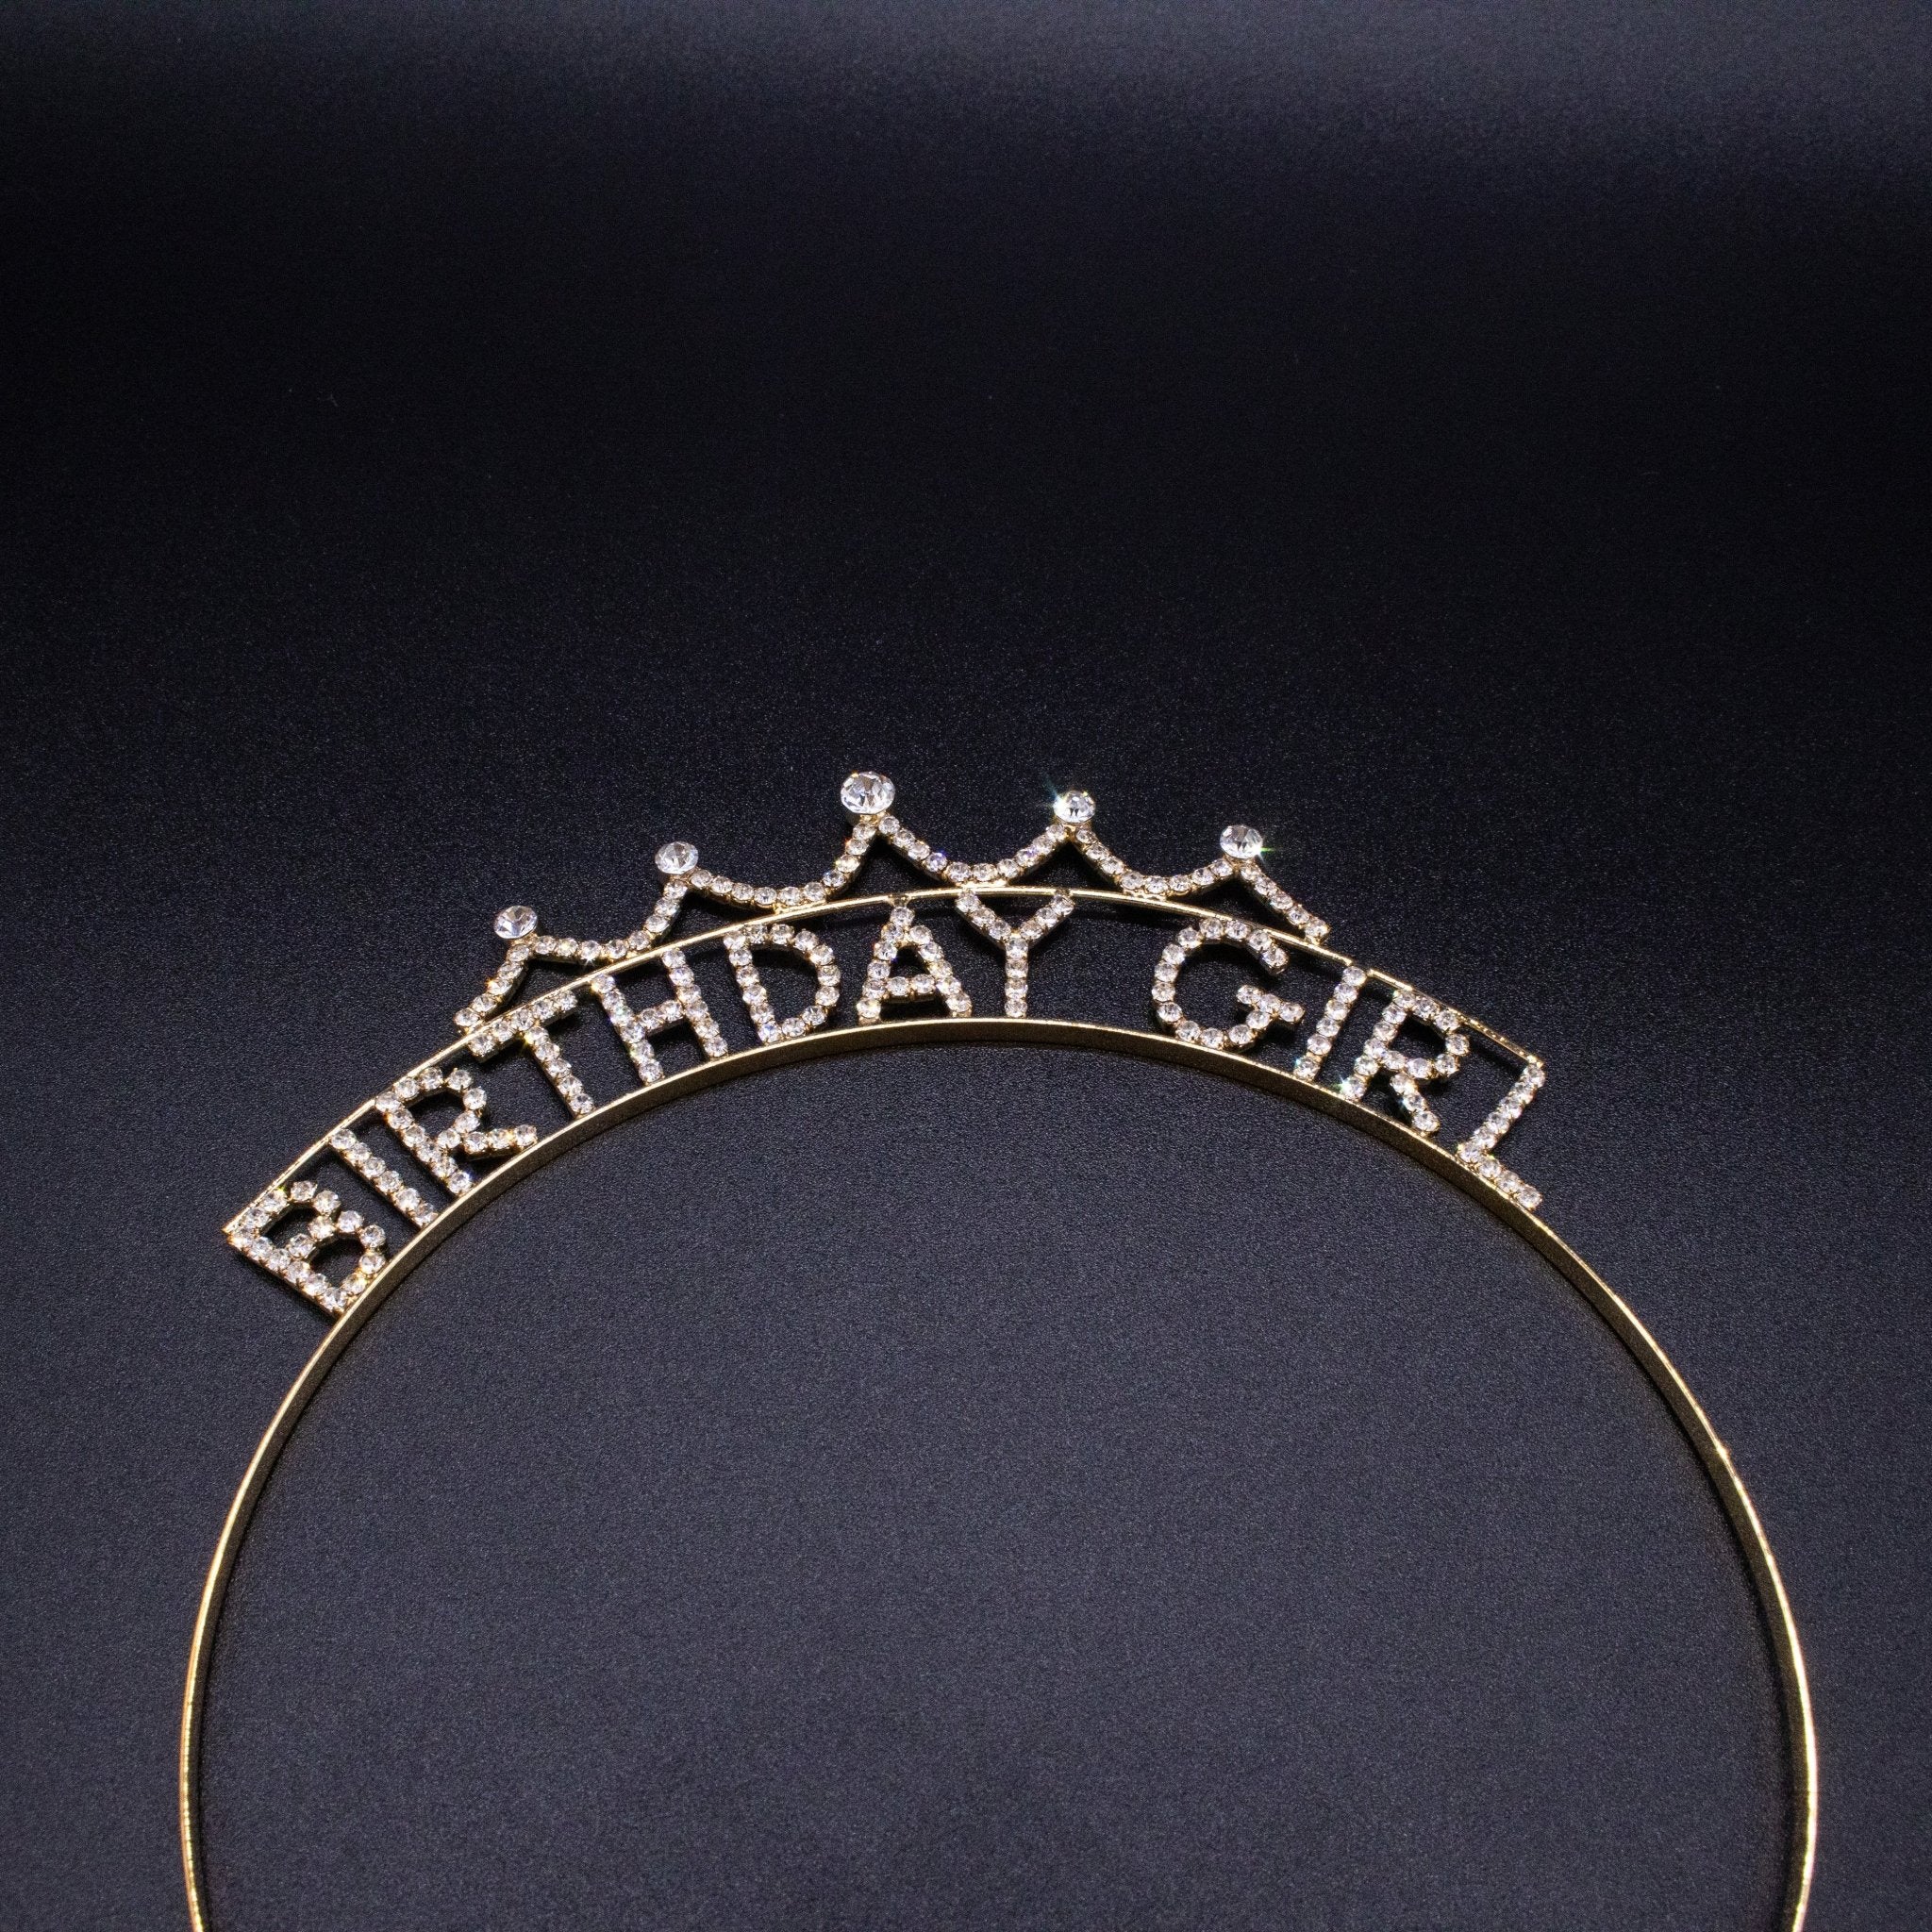 Birthday Girl Rhinestone Tiara Headband - FROG SAC